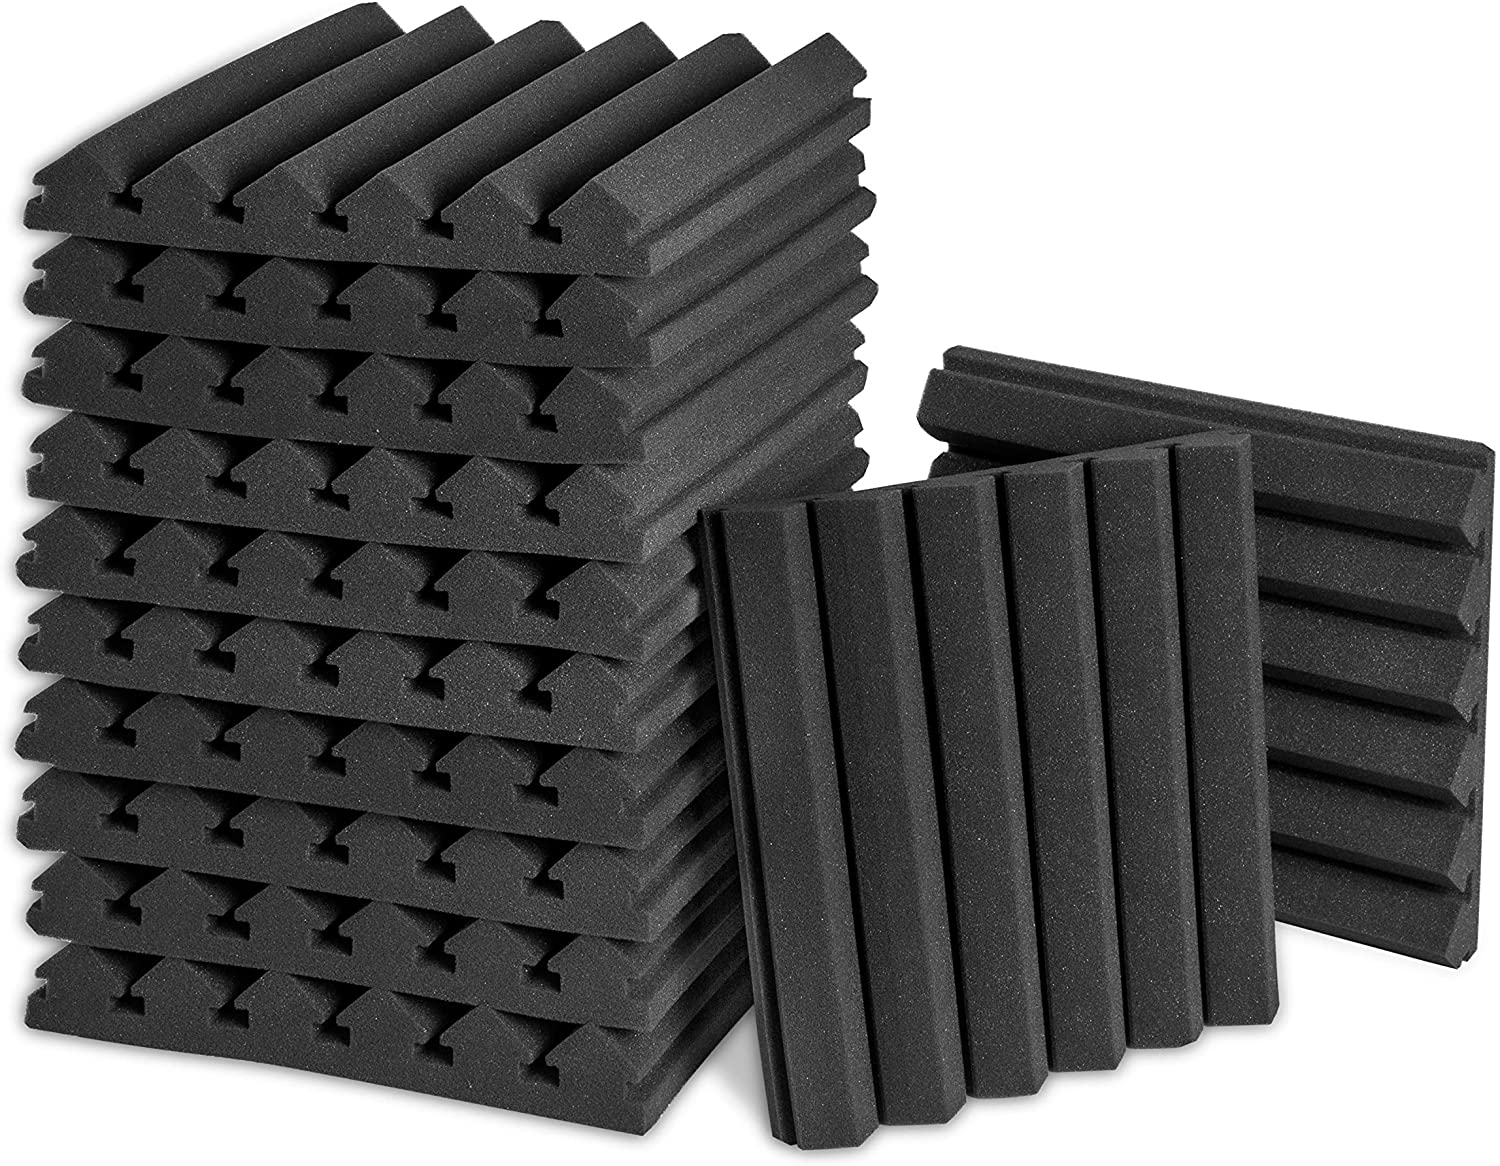 Black&Burgundy YDHTDLHC 48 Pack Acoustic Panels Studio Foam Wedges Fireproof Soundproof Padding Wall Panels 1 X 12 X 12 